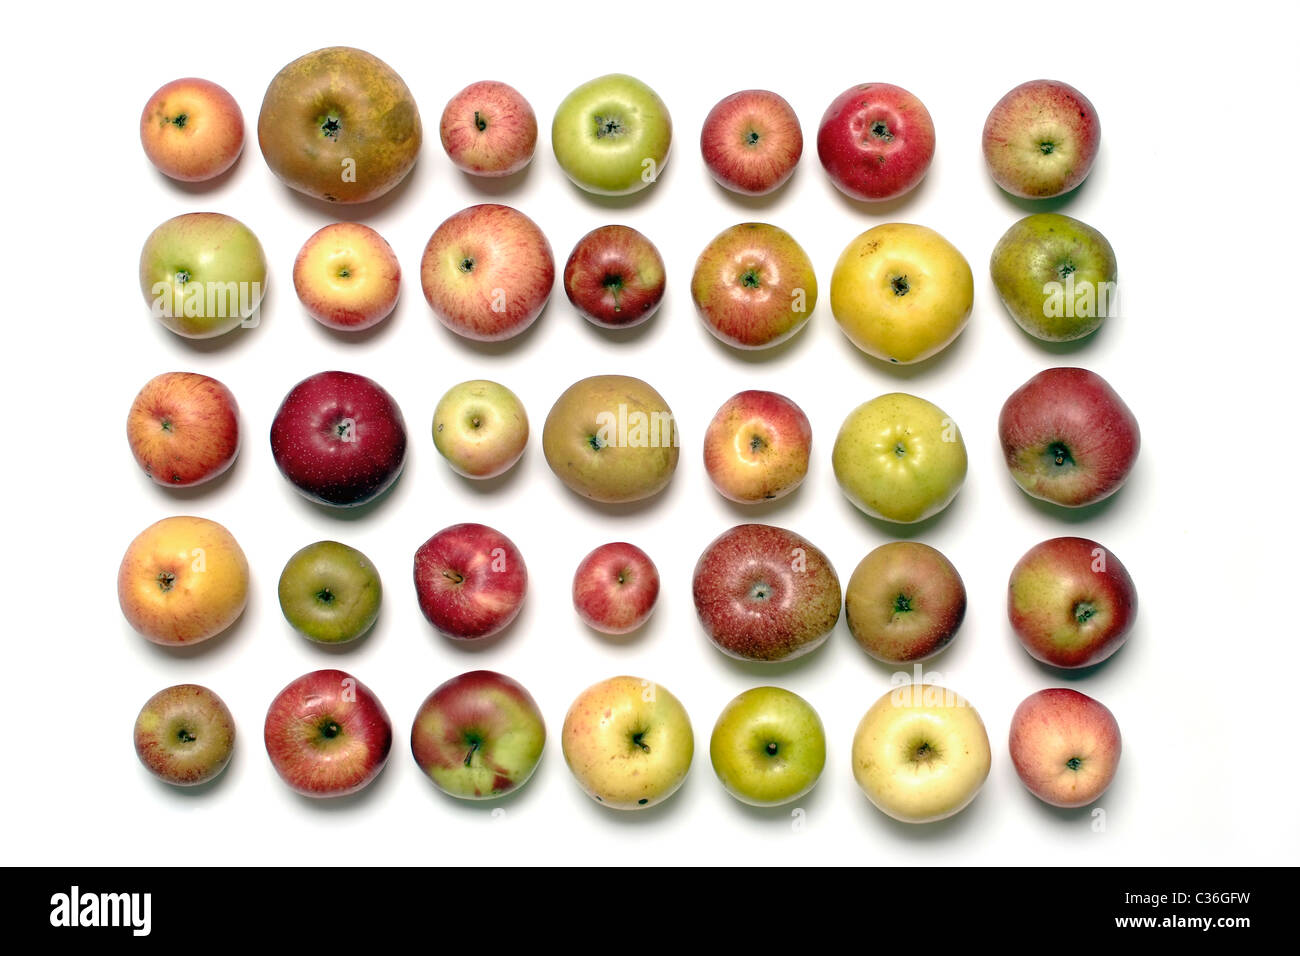 Überblick über verschiedene alte Apfelsorten Stockfoto